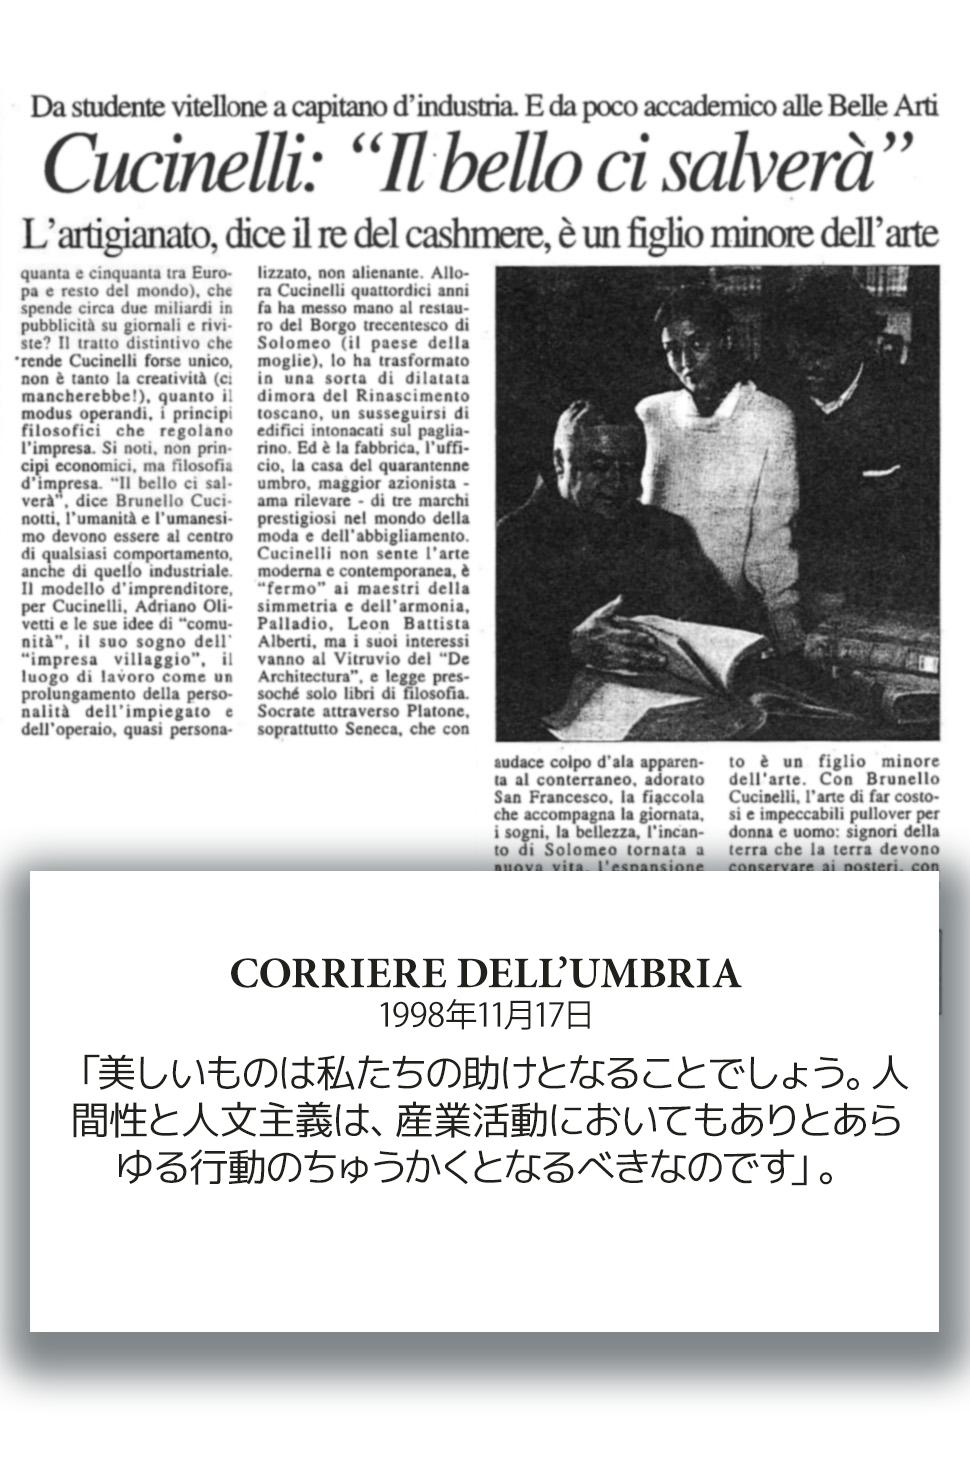 1998 Corriere dell'Umbria